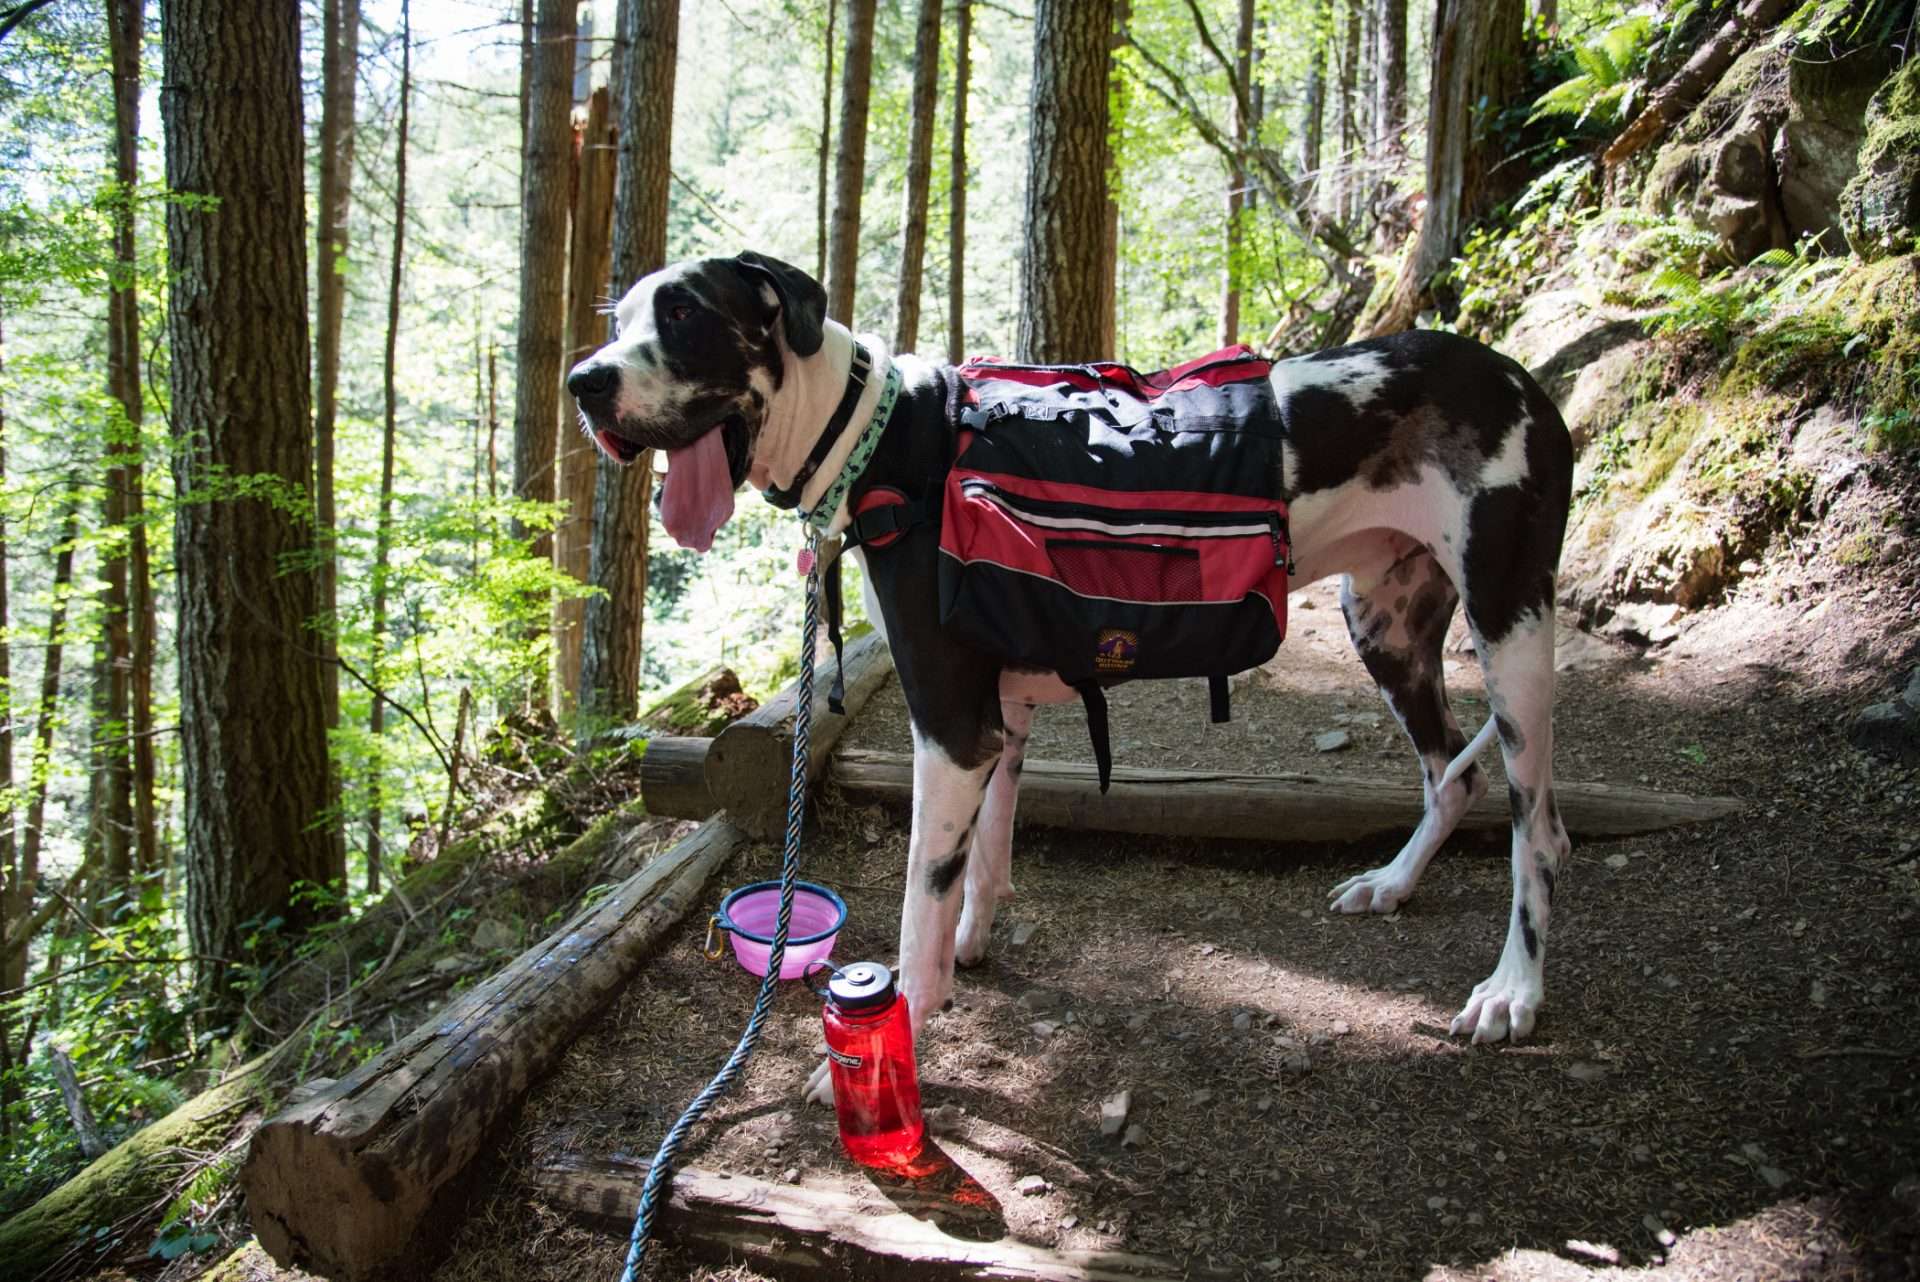 Dog hiking with saddle bag backpack on.